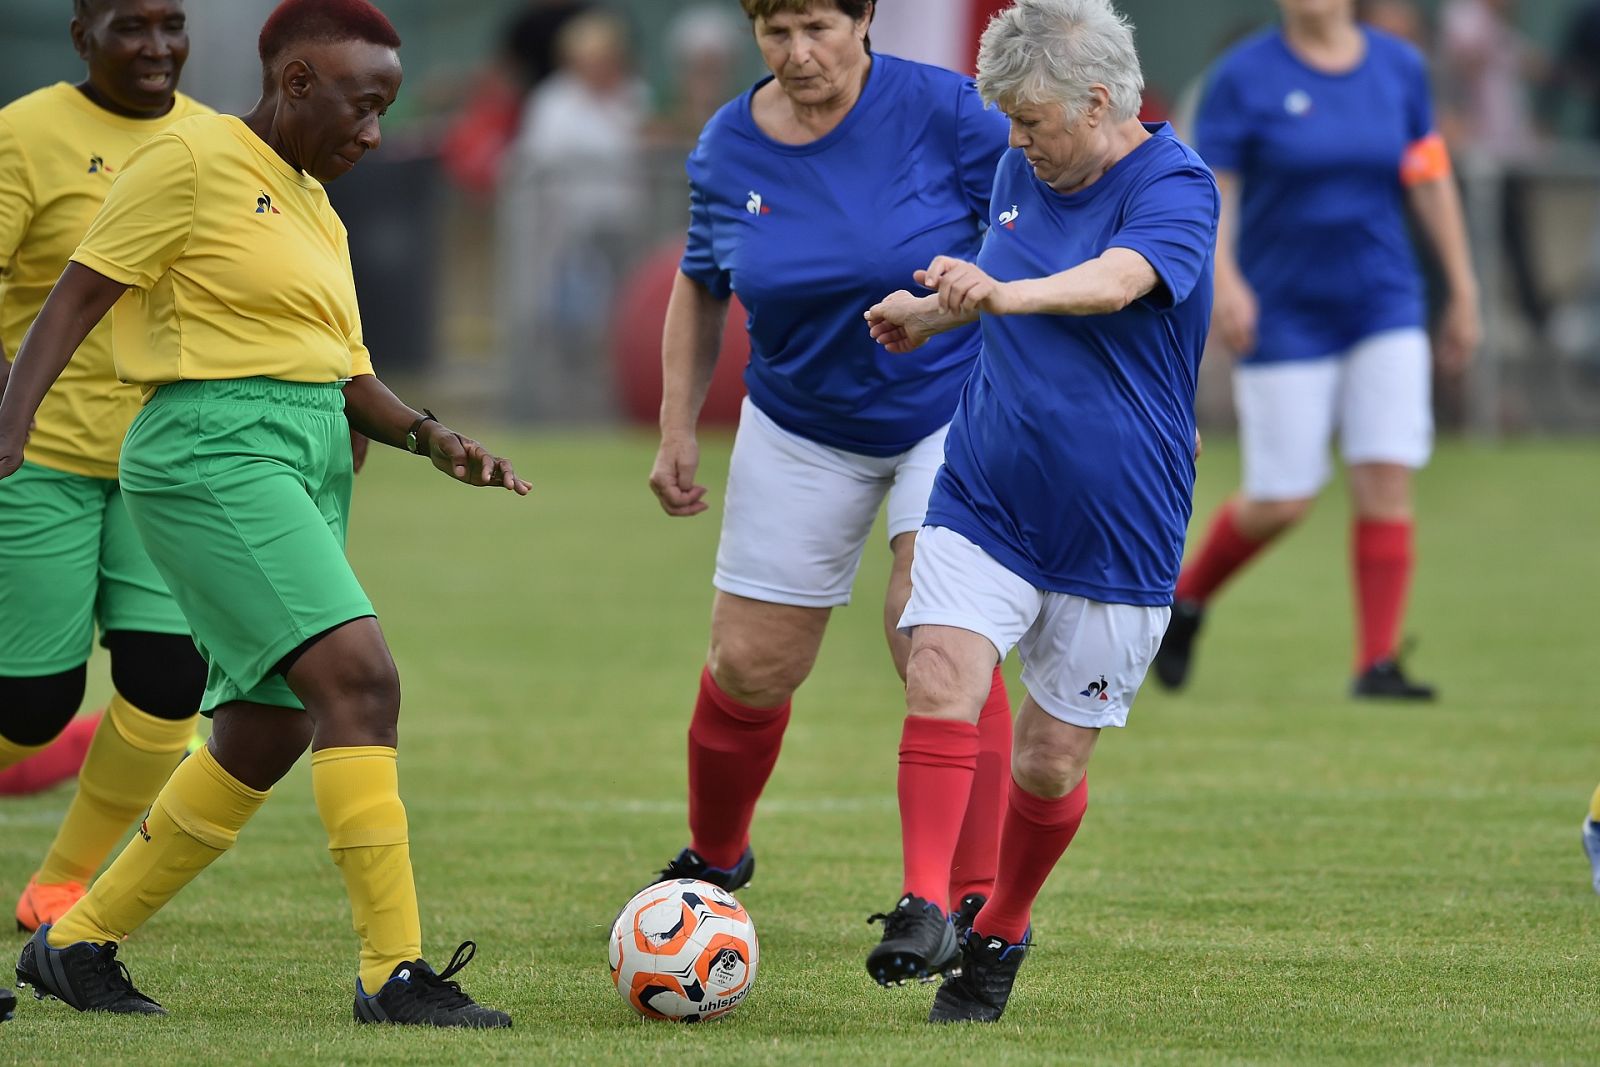 FOOTBALL : Les soccer Grannies 2019 - France vs Afrique du Sud - 19/06/2019